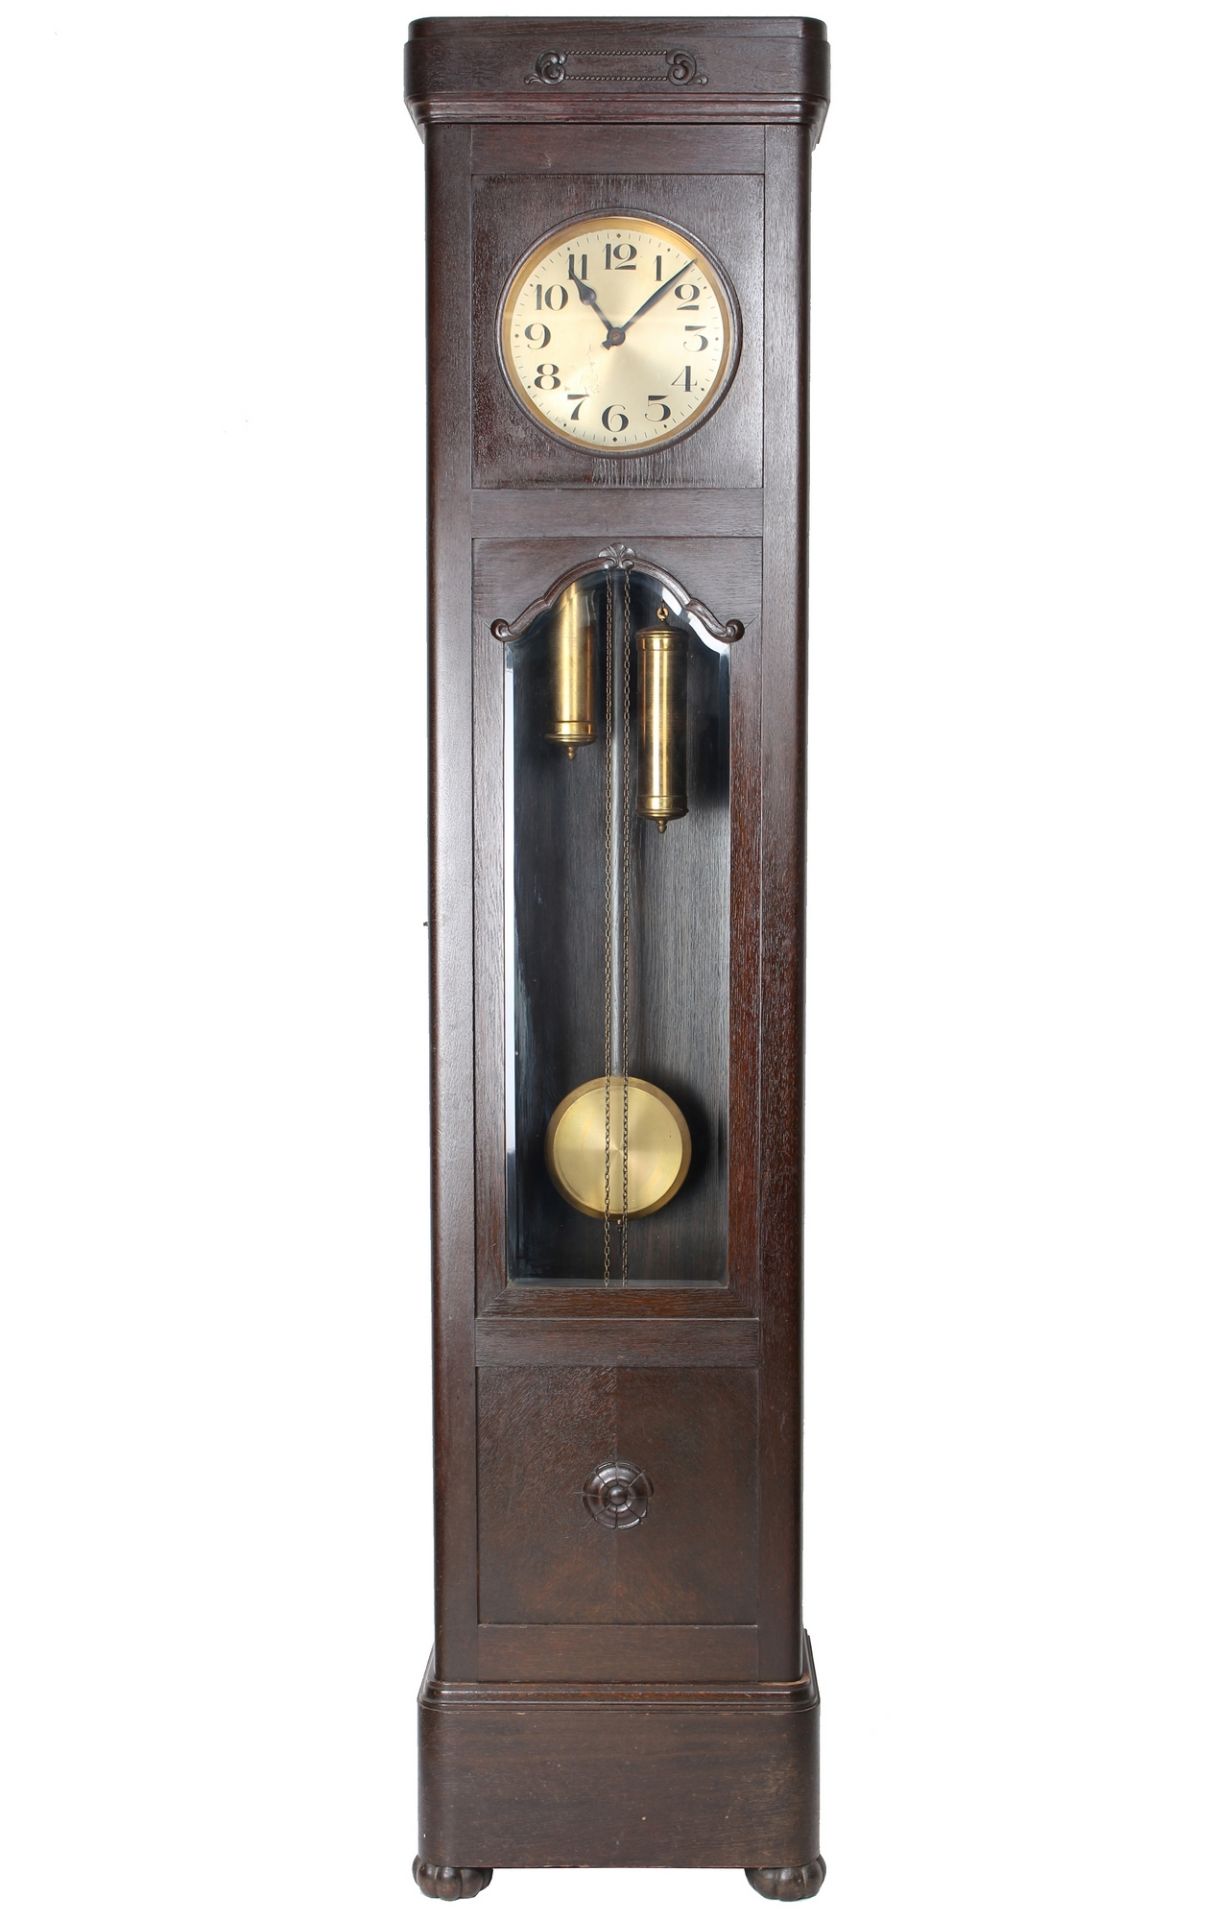 Standuhr um 1920, german grandfather clock about 1920